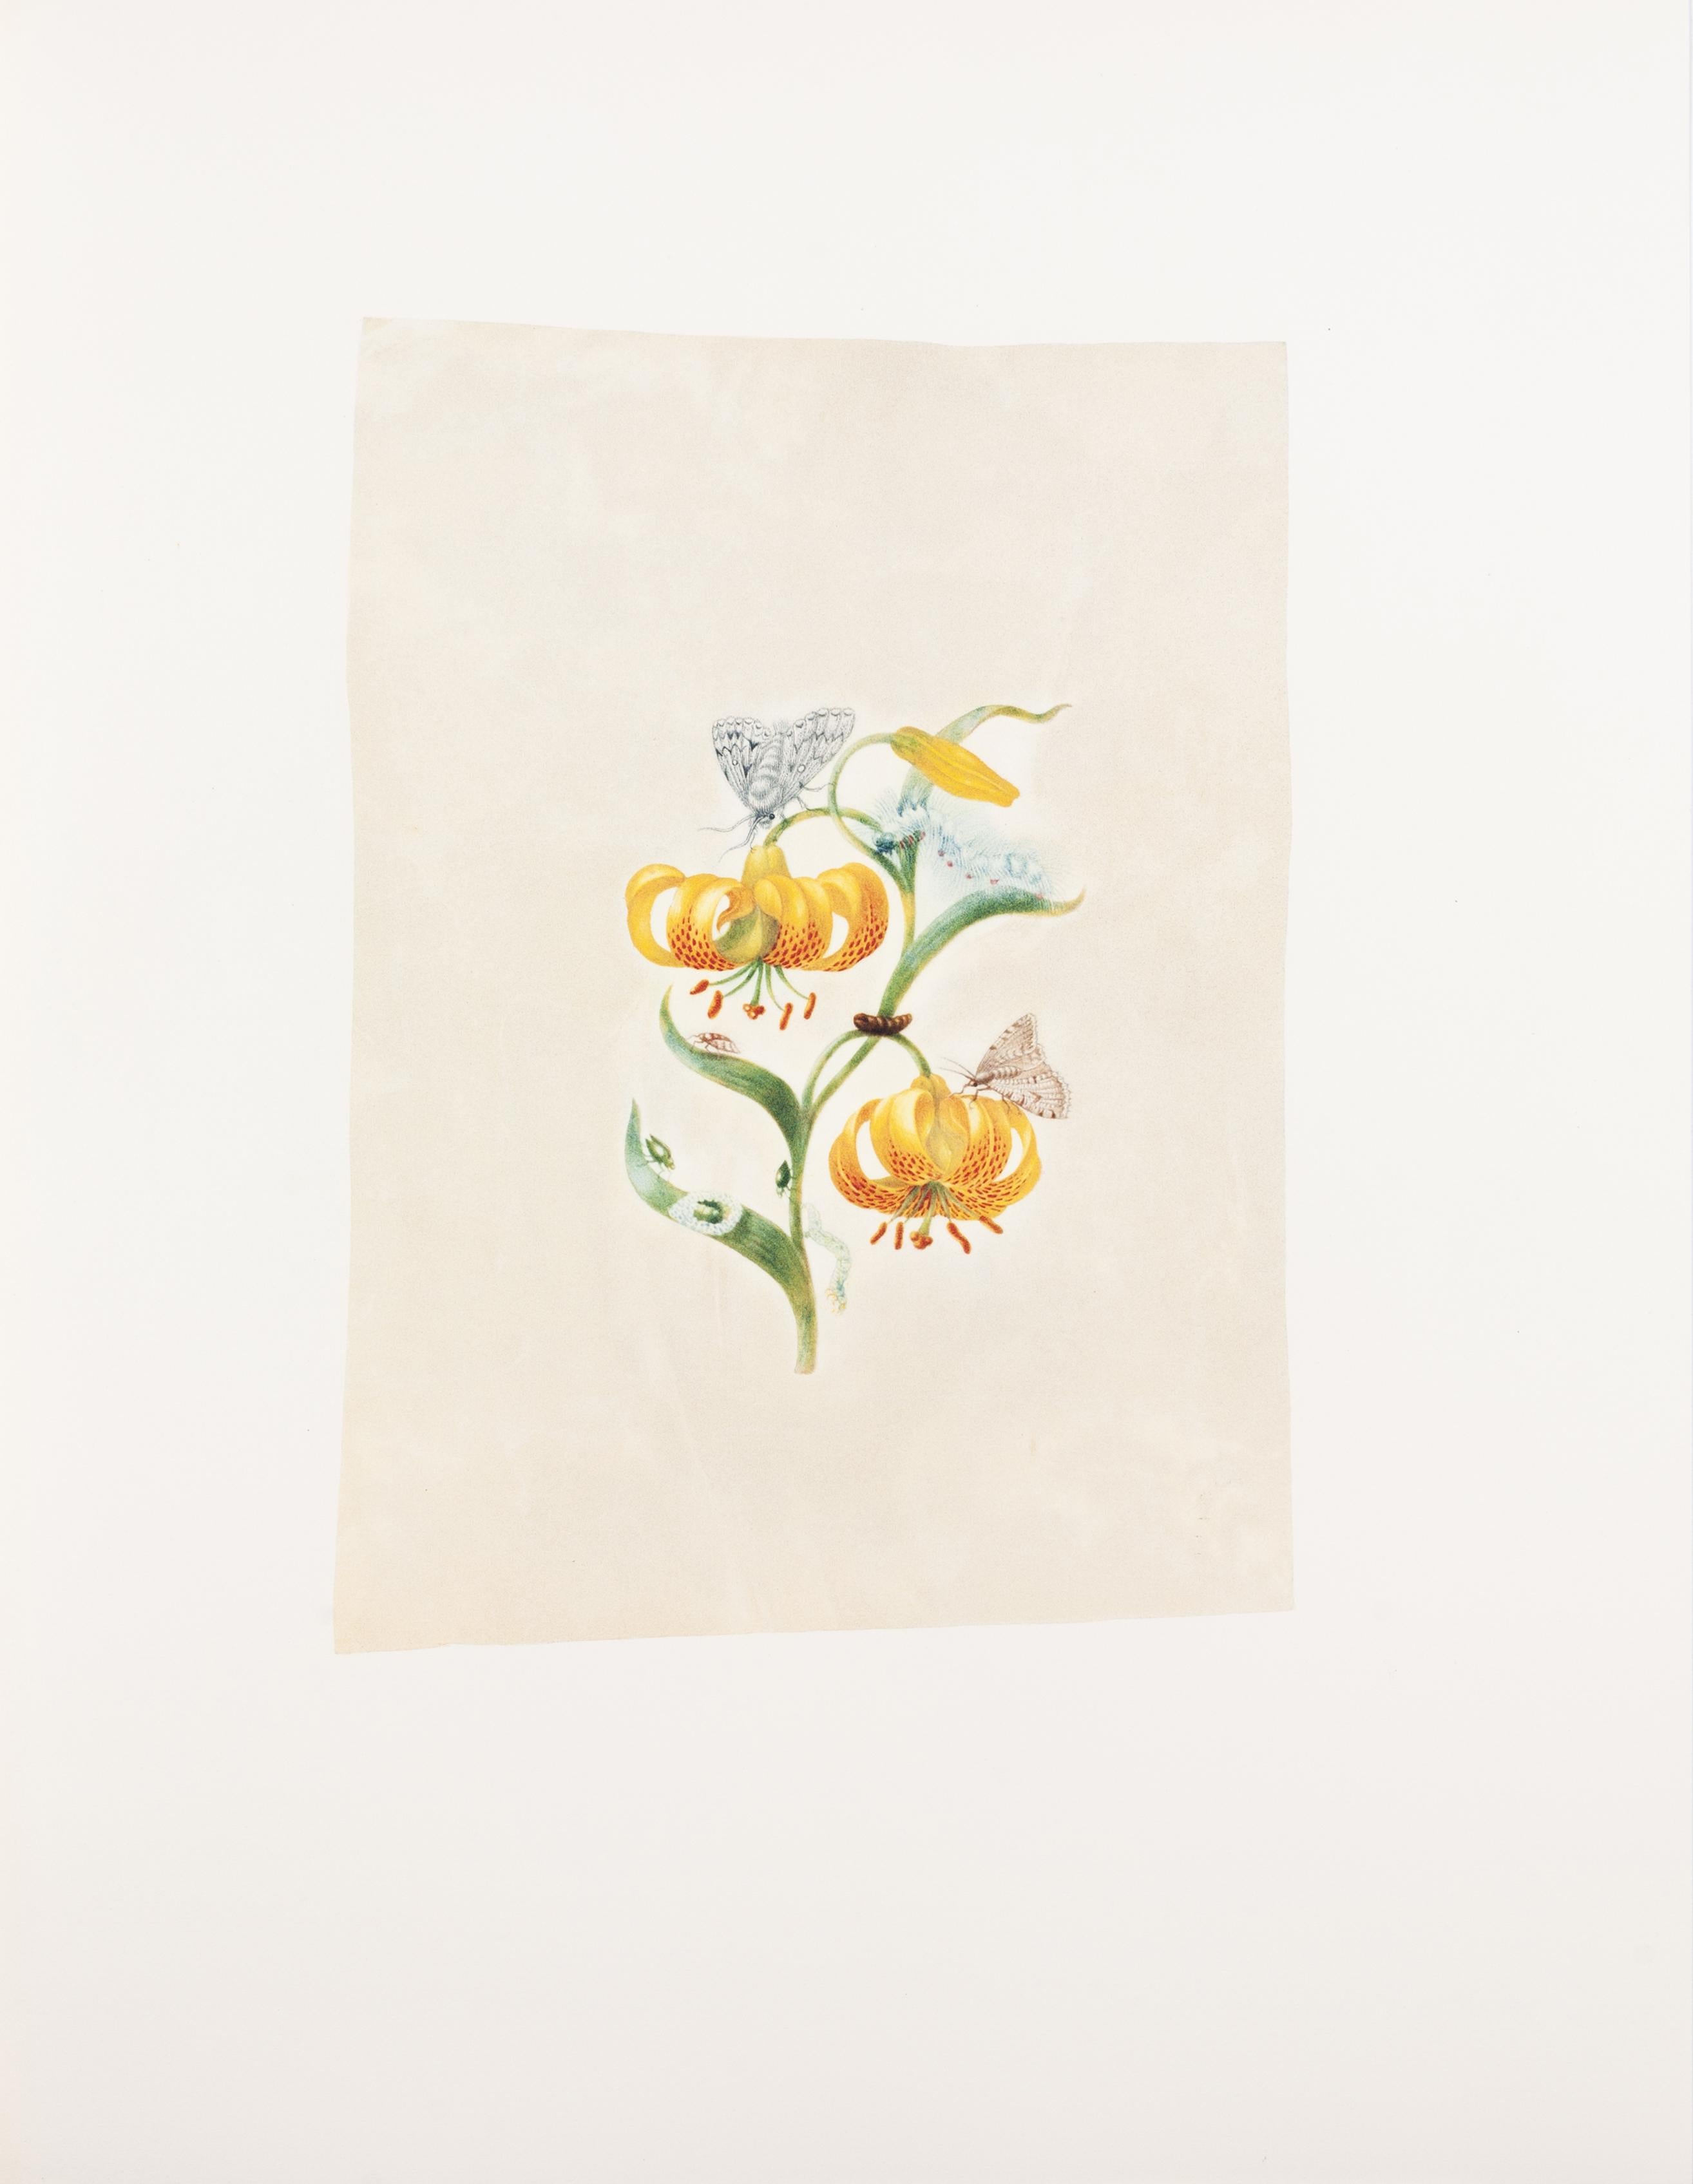 42. Martagon lily, Frog-hopper, Acronicta leporina, Looper, inchworm - Print by Maria Sybilla Merian